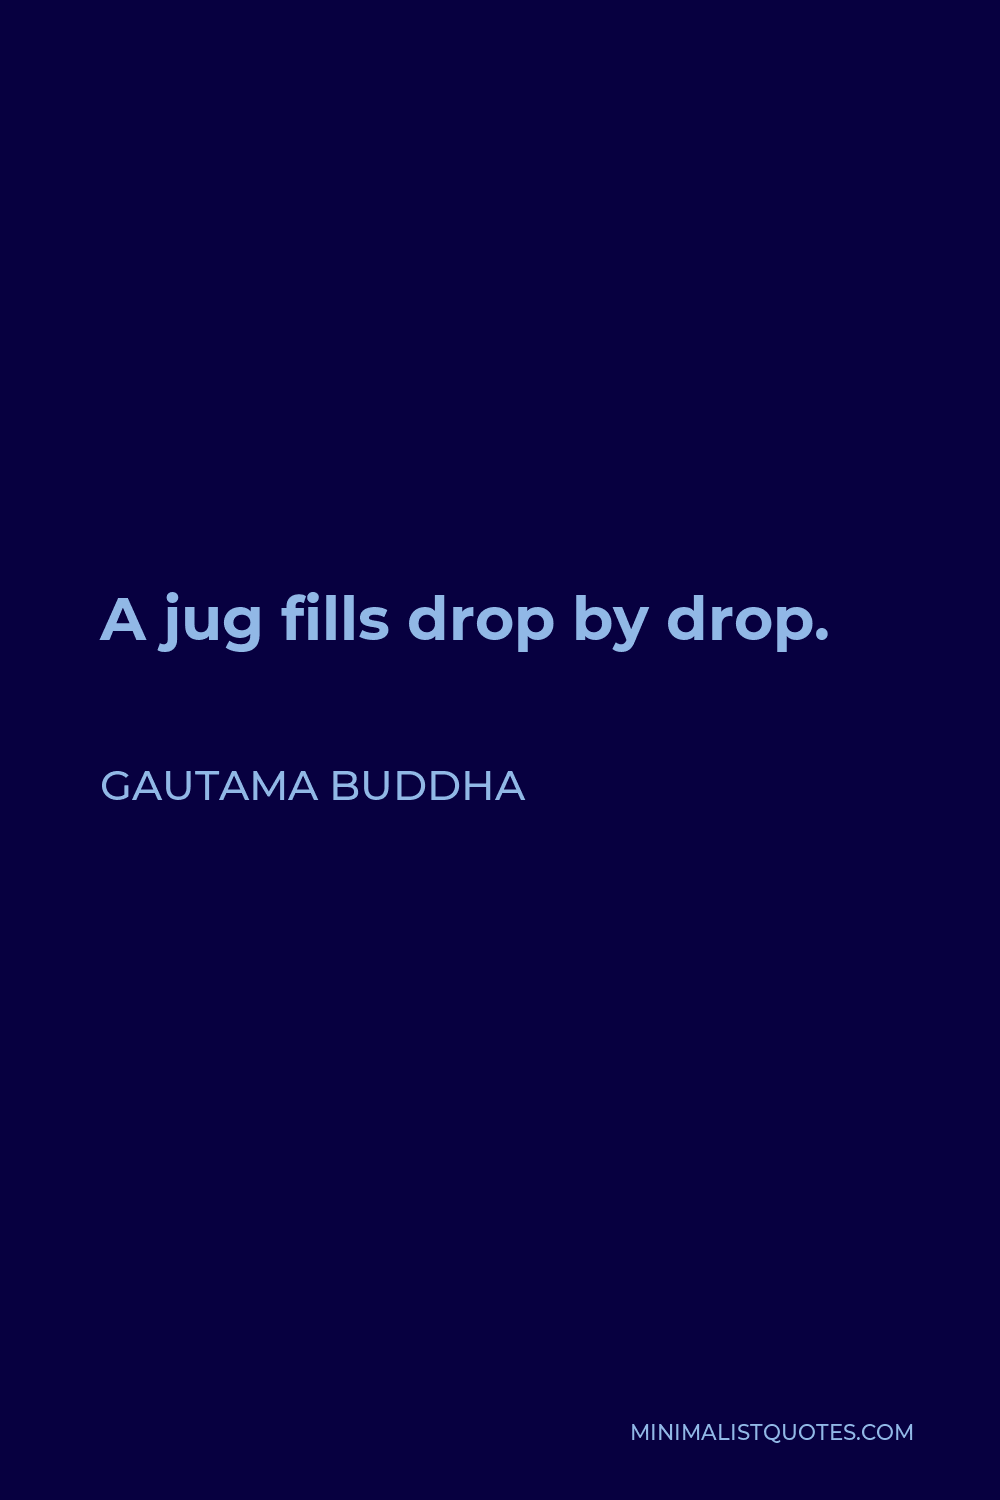 Gautama Buddha Quote - A jug fills drop by drop.